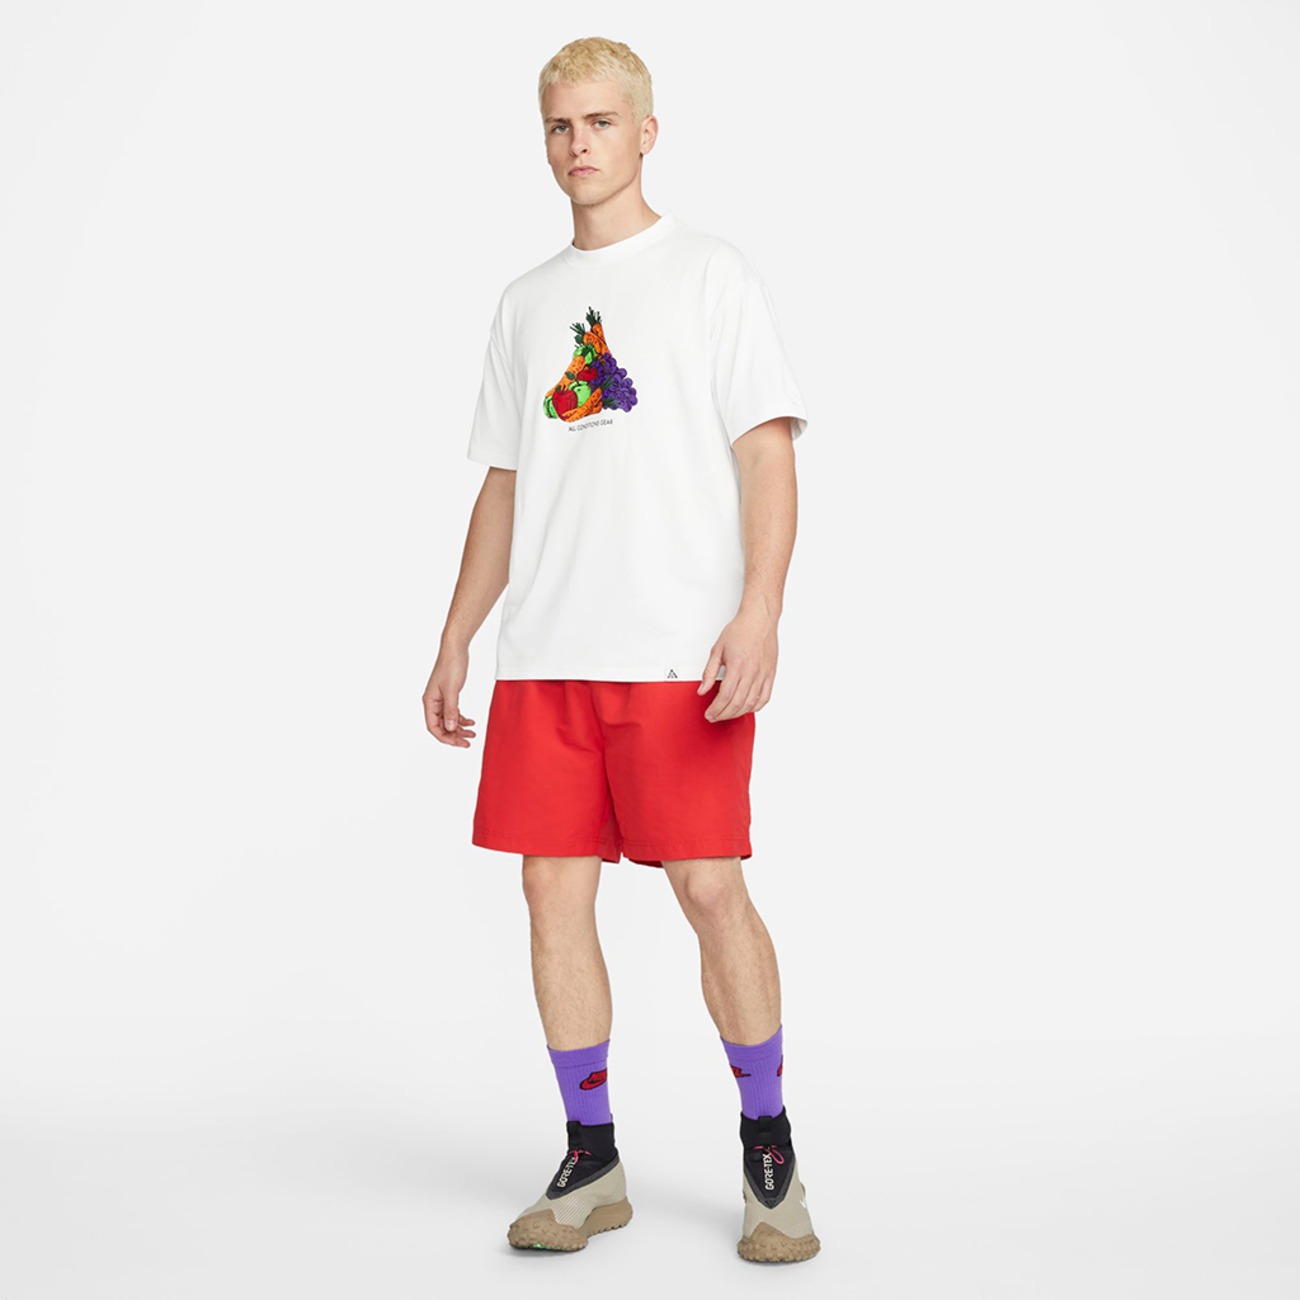 Camiseta Nike ACG "Fruit and Veggies" Masculina - Foto 5